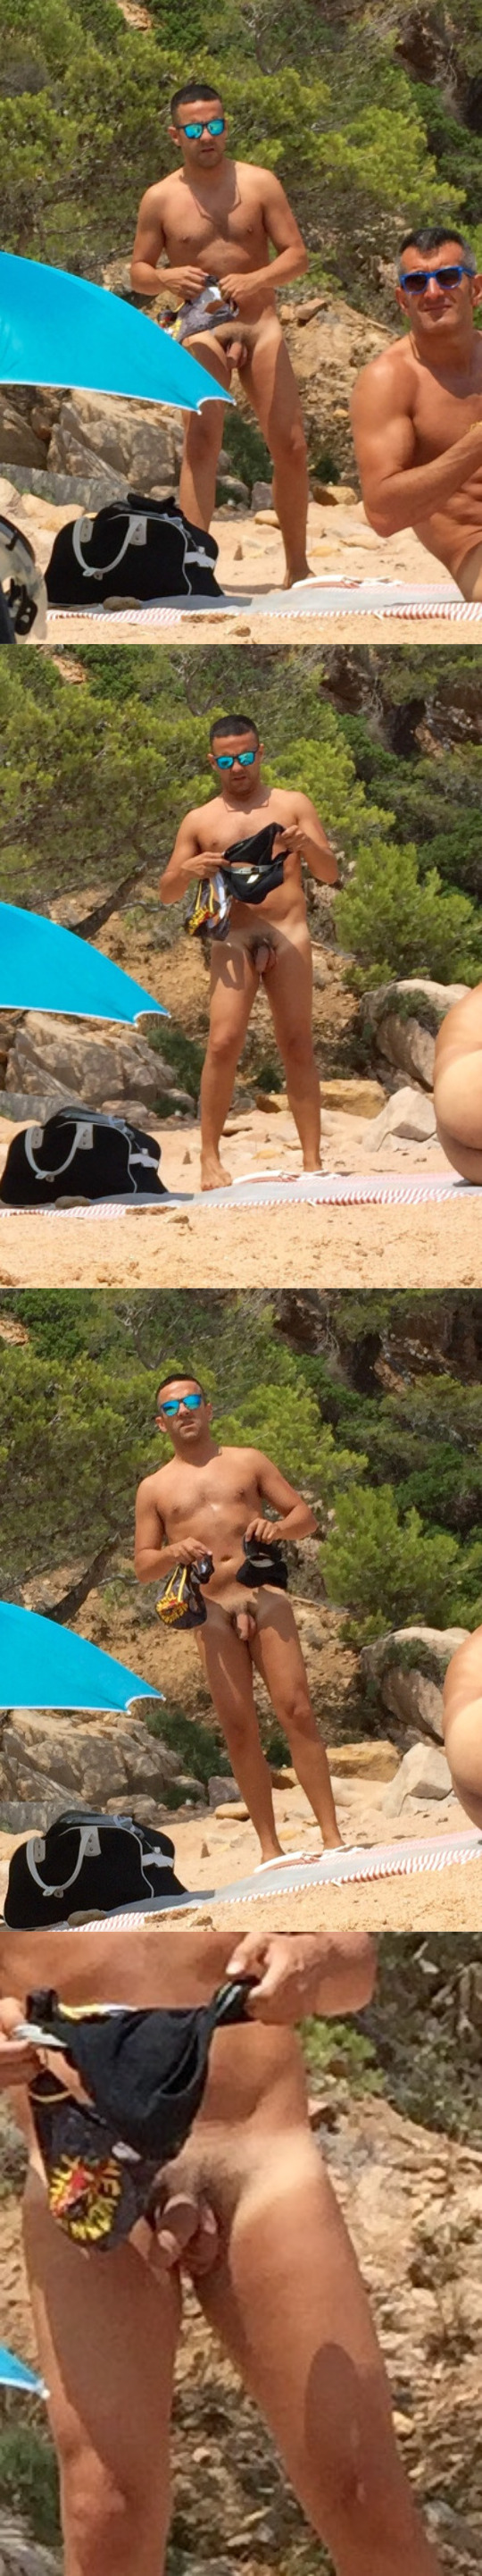 hung guy caught naked nudist beach spycam